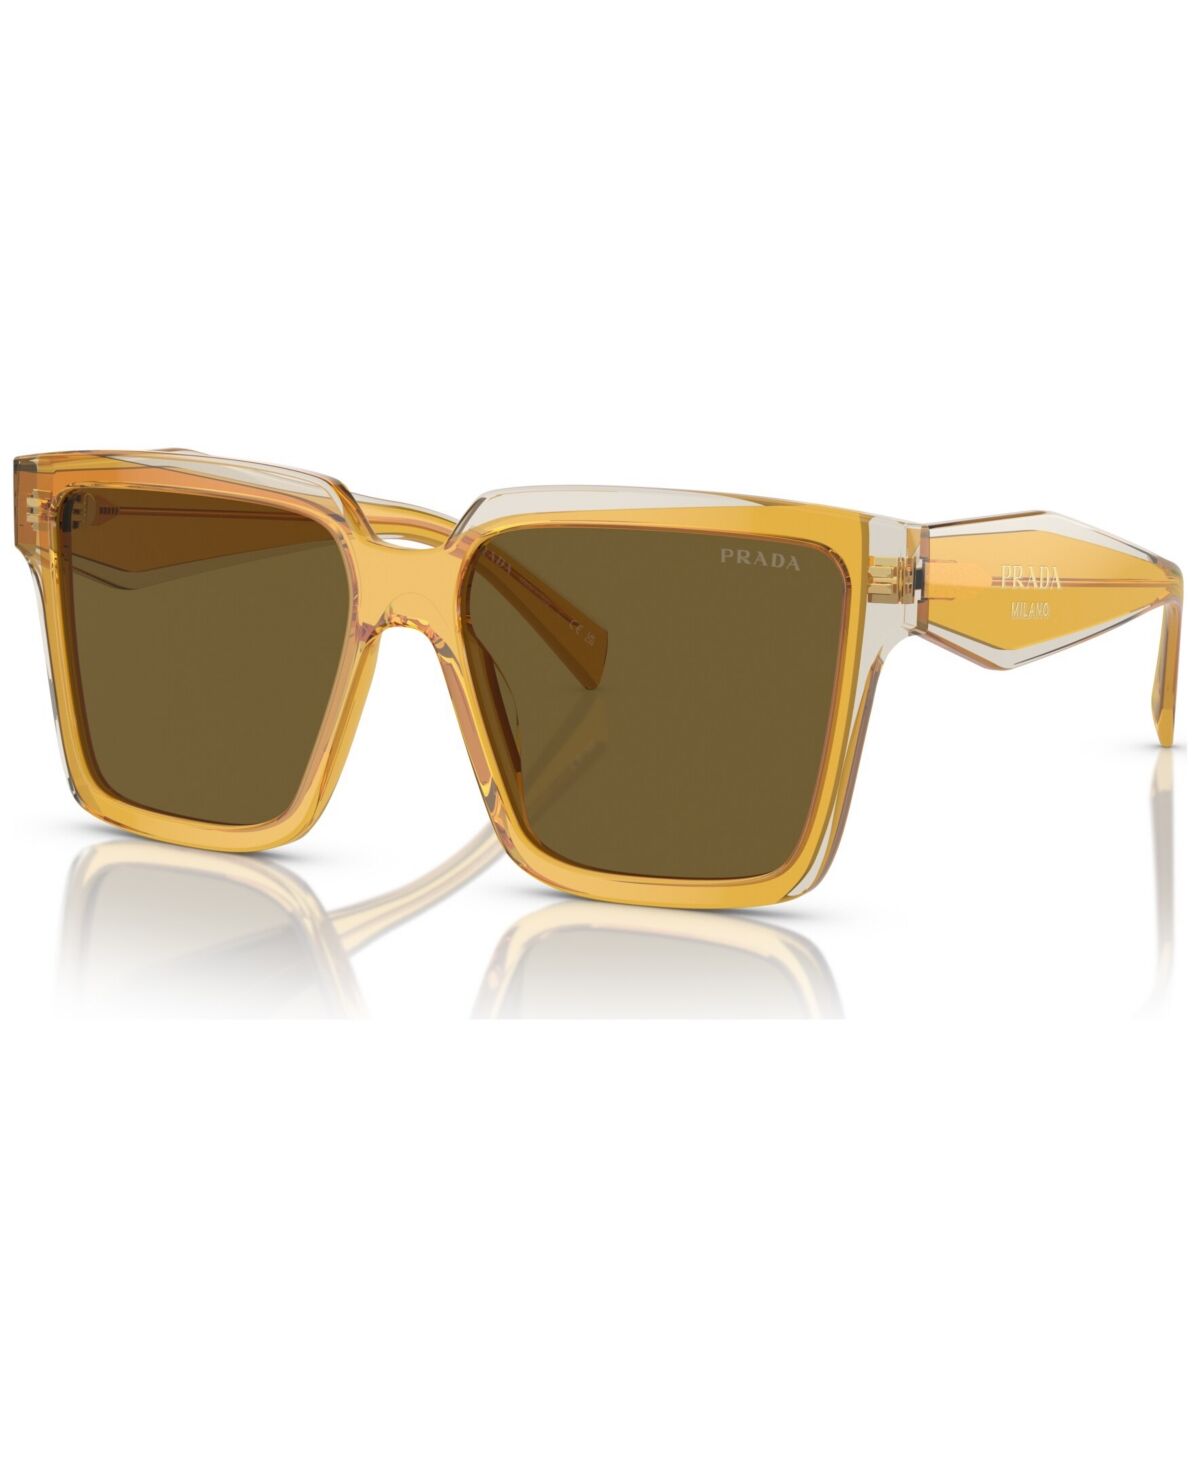 Prada Women's Sunglasses, Pr 24ZS - Ocher, Crystal Gray